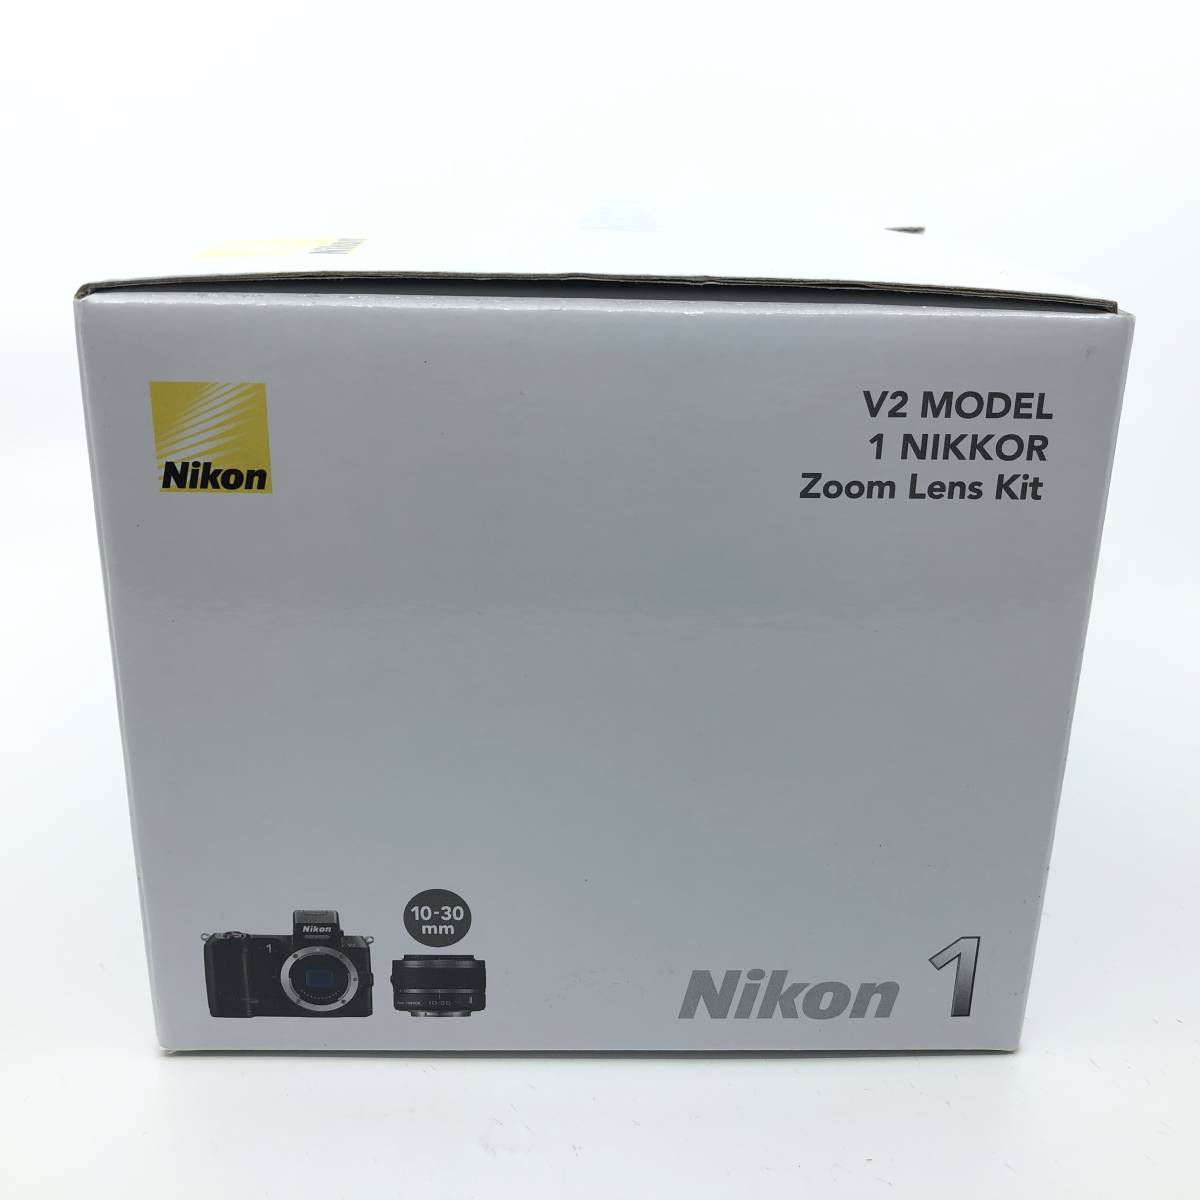 [ original box only ] Nikon Nikon 1 V2 MODEL 1 NIKKOR Zoom Lens Kit for original box only #B1343